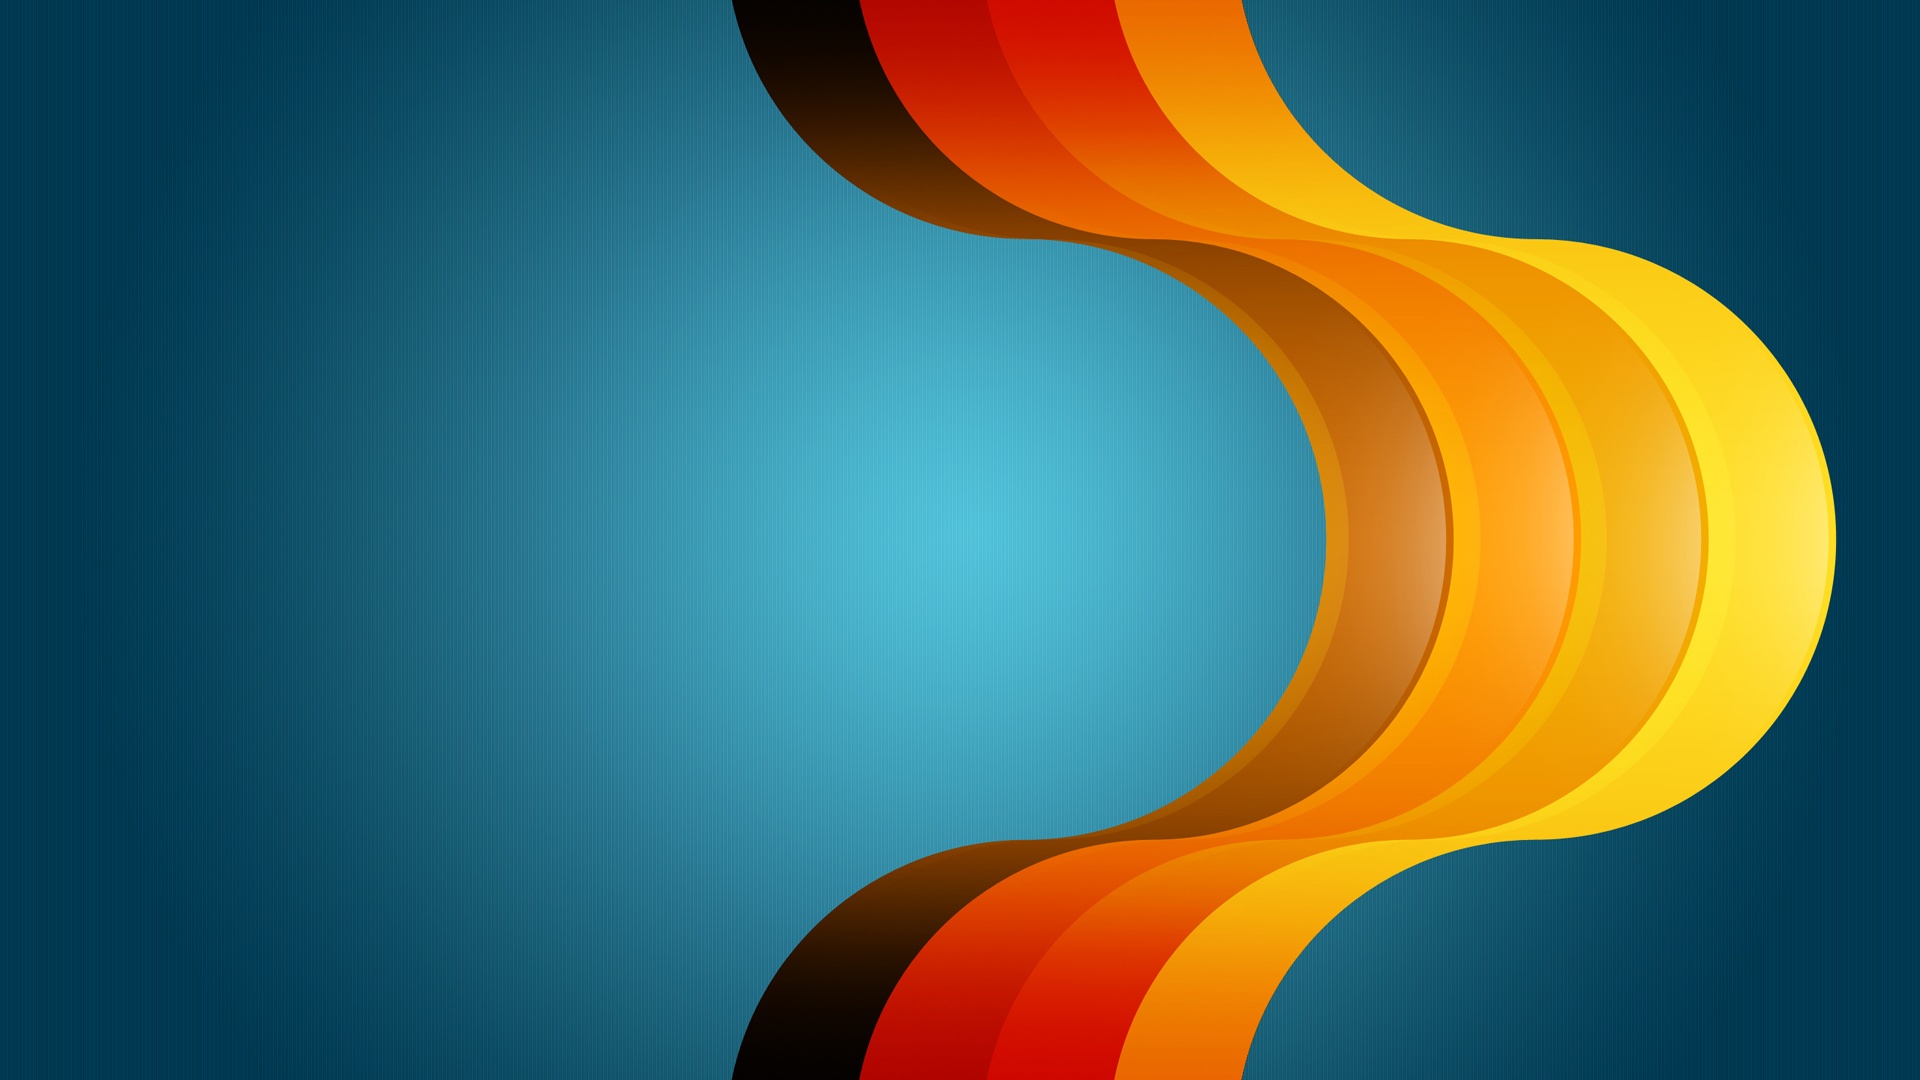 Blue And Orange Backgrounds Free Pixelstalk Net